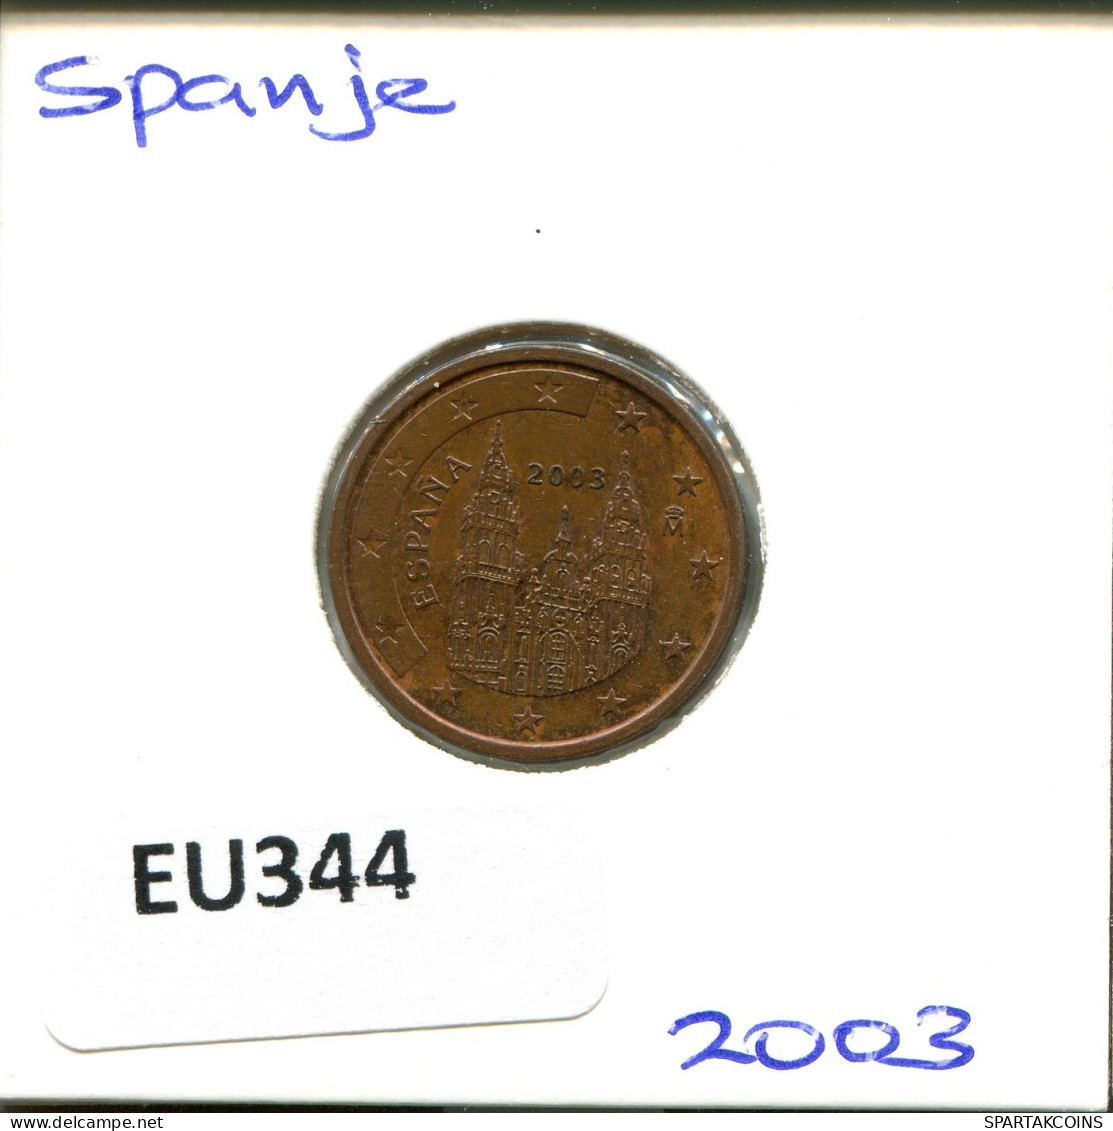 2 EURO CENTS 2003 SPAIN Coin #EU344.U.A - Espagne